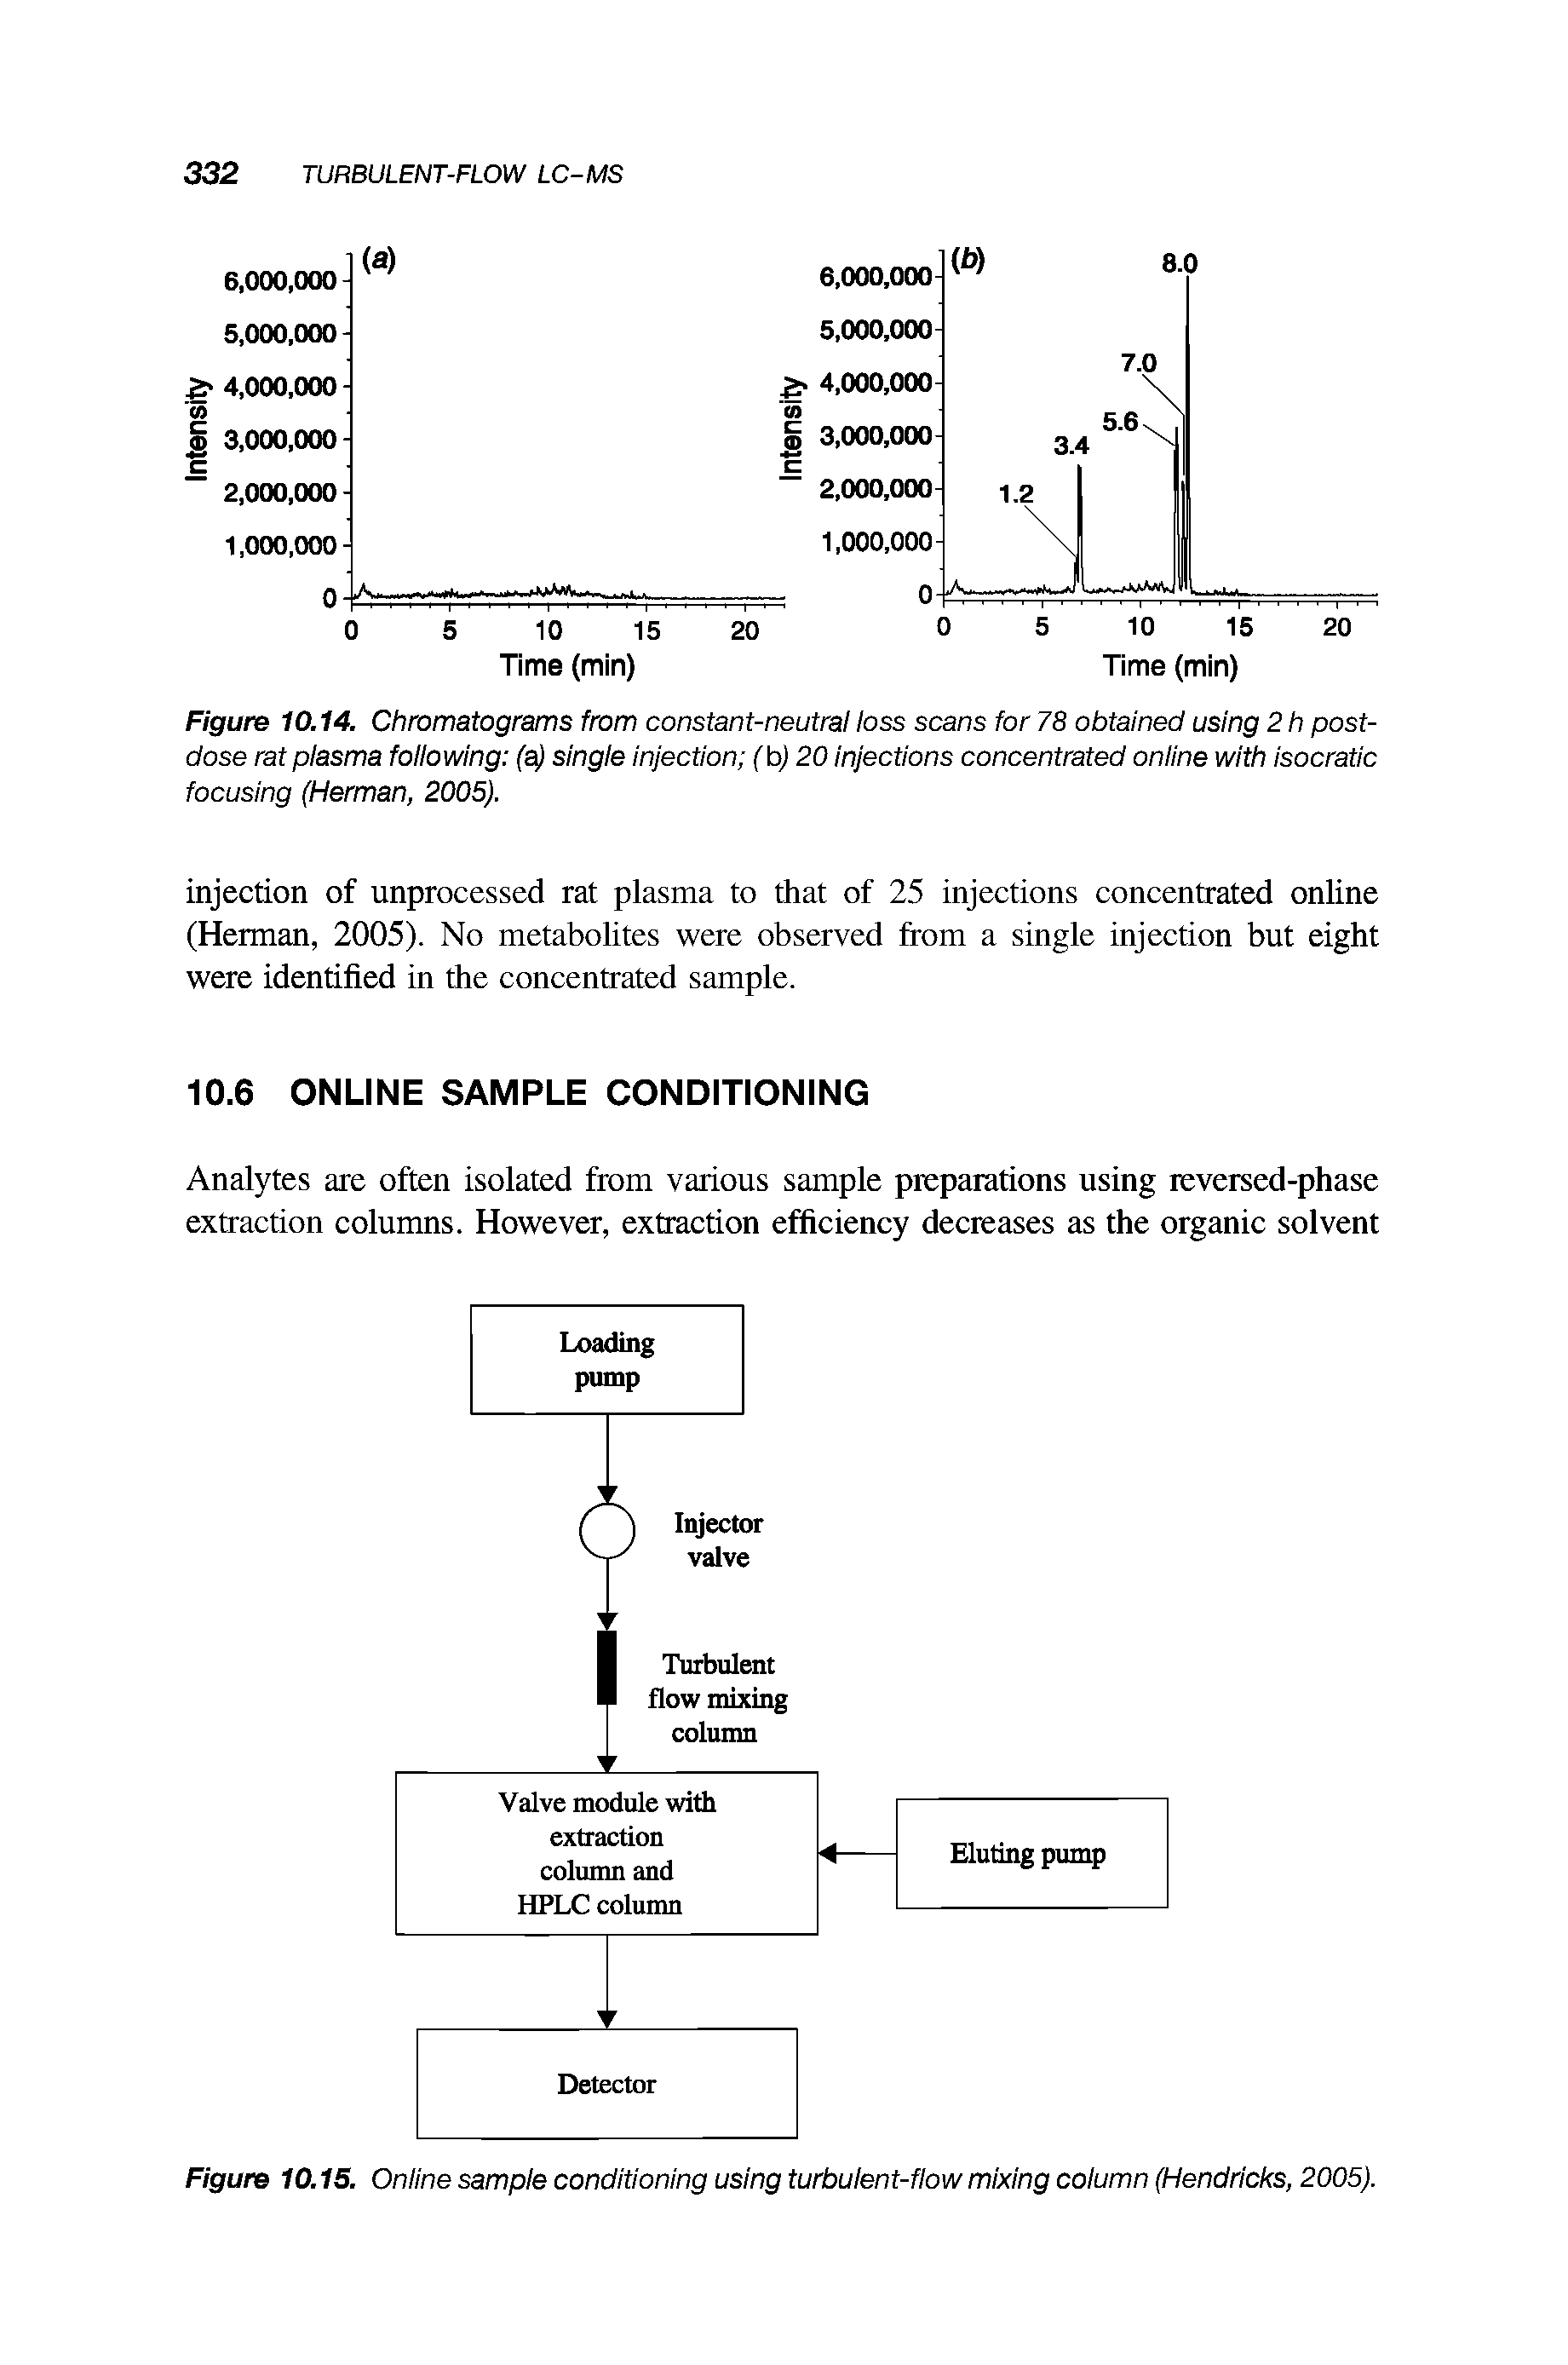 Figure 10.15. Online sample conditioning using turbulent-flow mixing column (Hendricks, 2005).